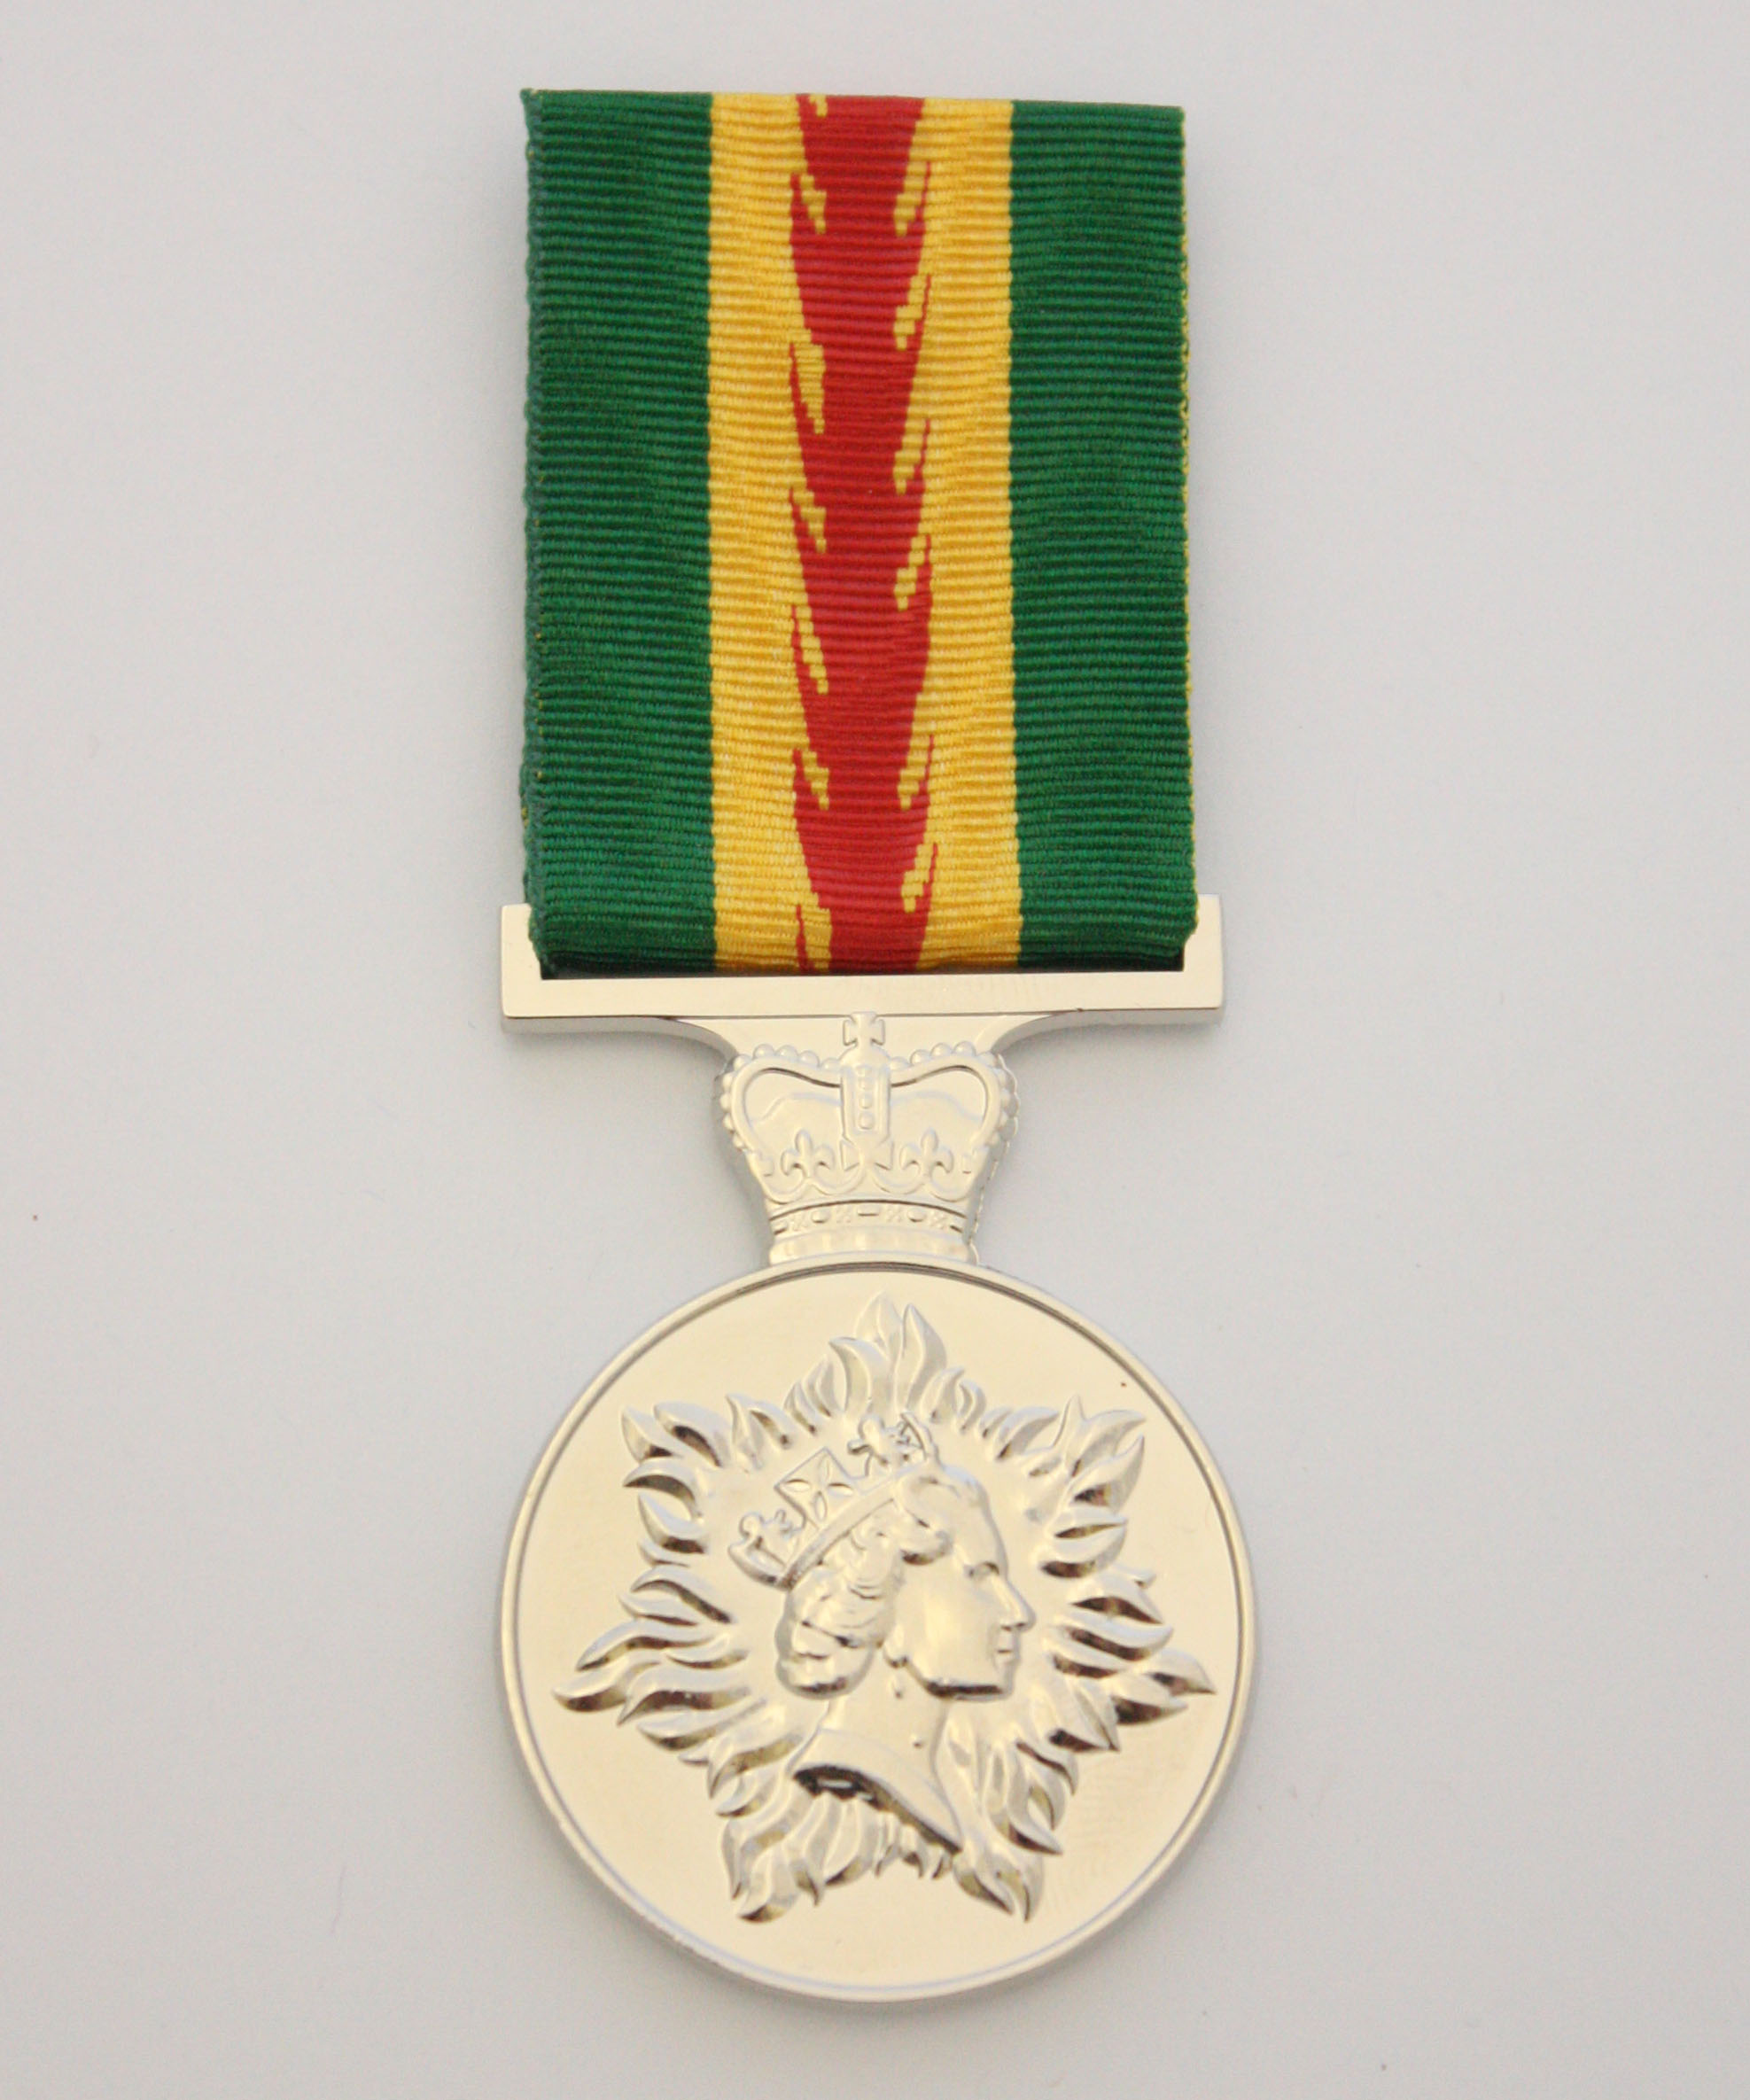 Aust. Fire Service Medal